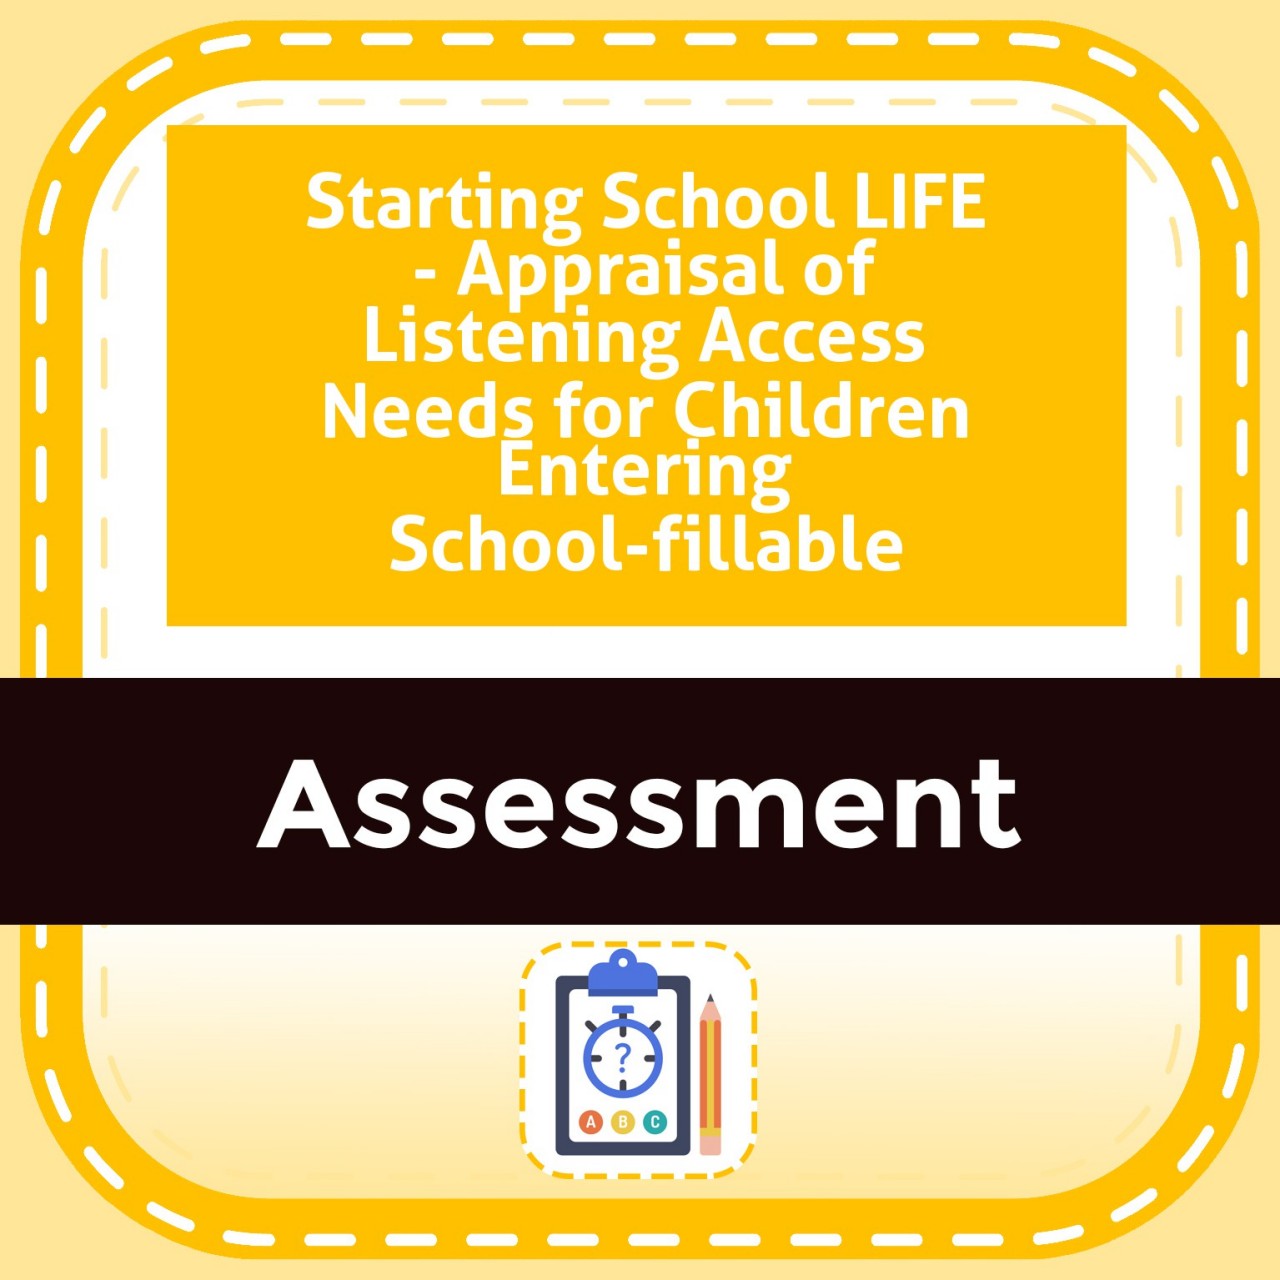 Starting School LIFE - Appraisal of Listening Access Needs for Children Entering School-fillable